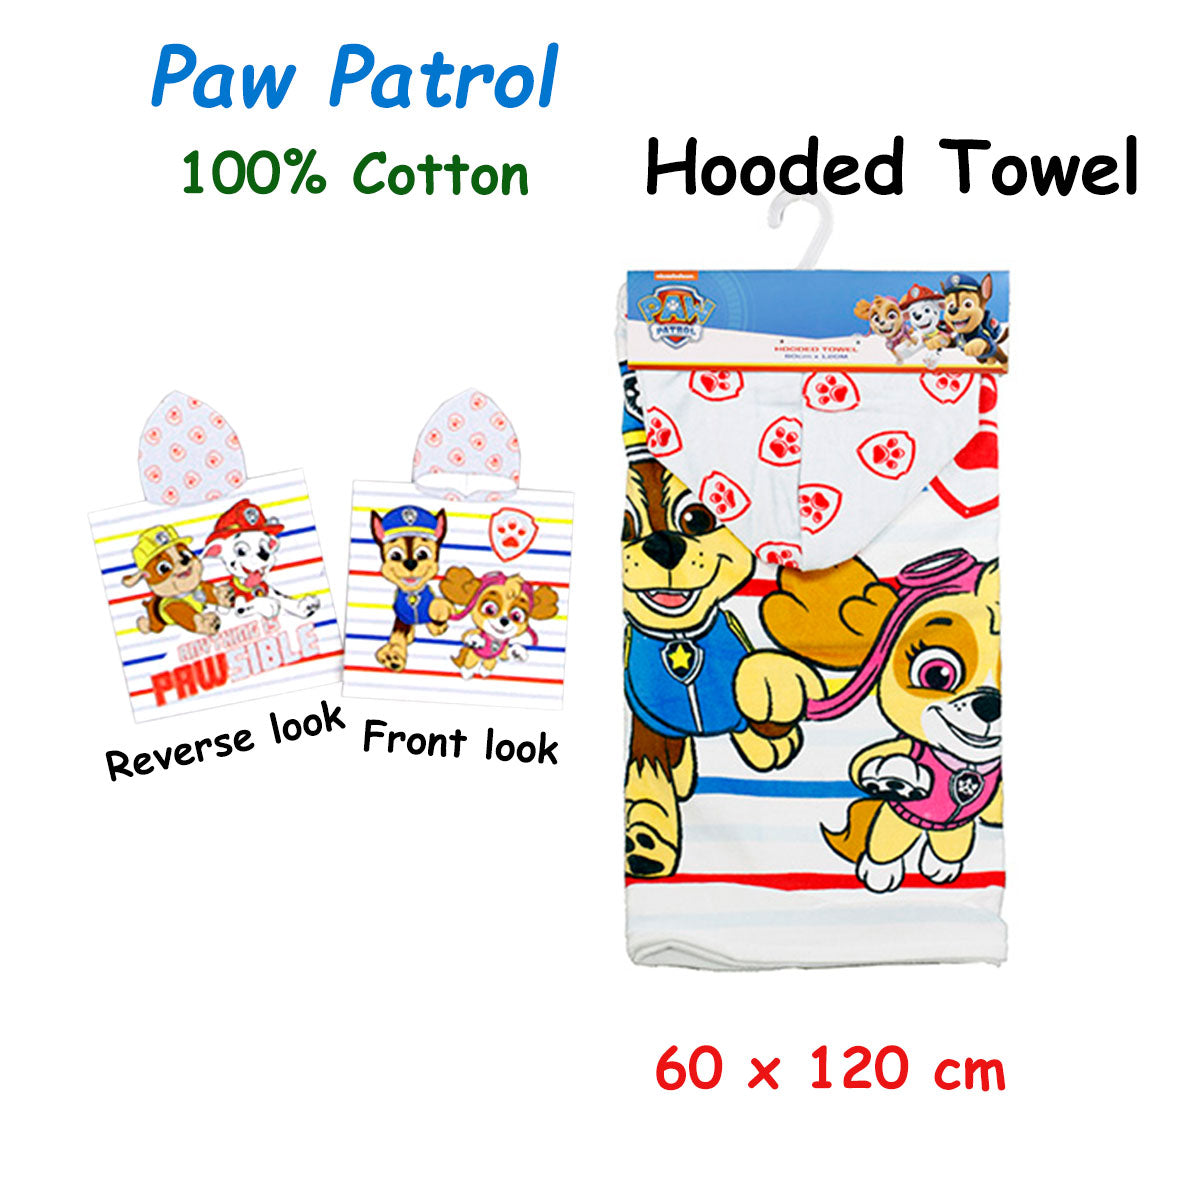 Paw Patrol Cotton Hooded Licensed Towel 60 x 120 cm